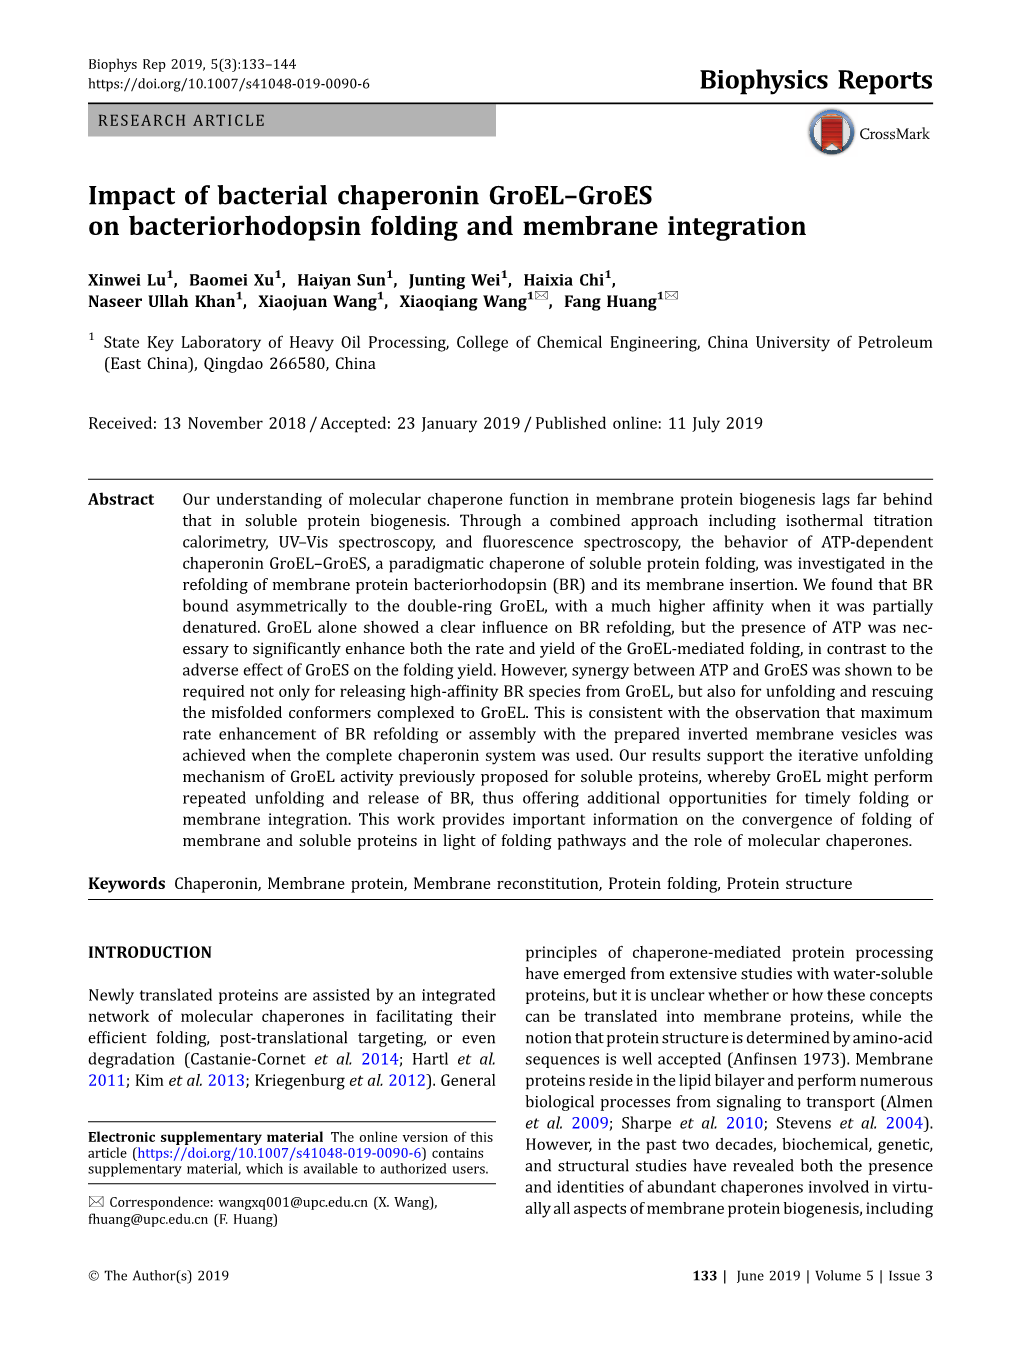 Impact of Bacterial Chaperonin Groel–Groes on Bacteriorhodopsin Folding and Membrane Integration